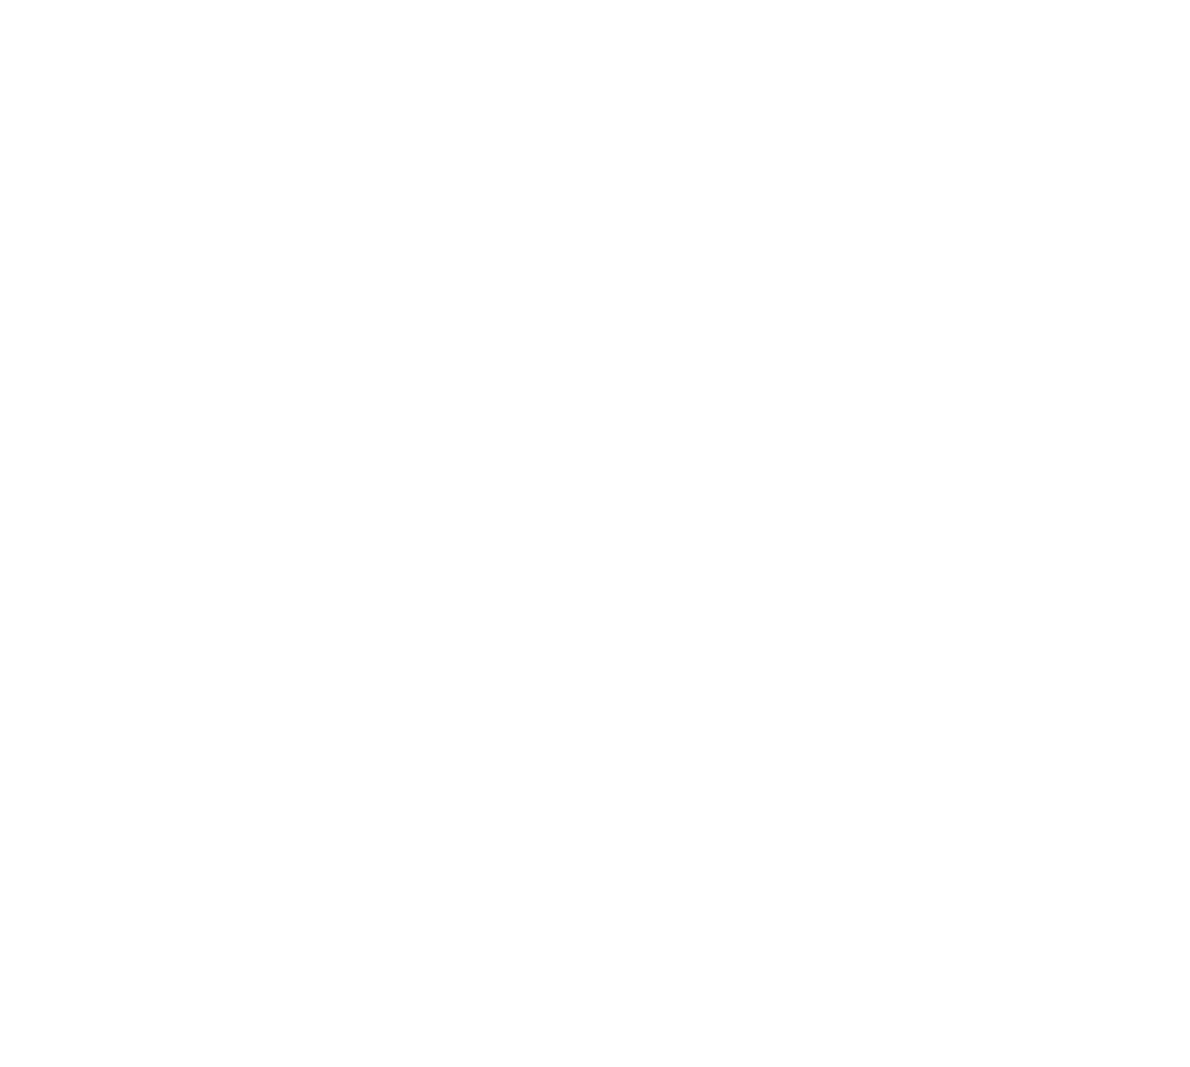 Preston Ventures company logo in white